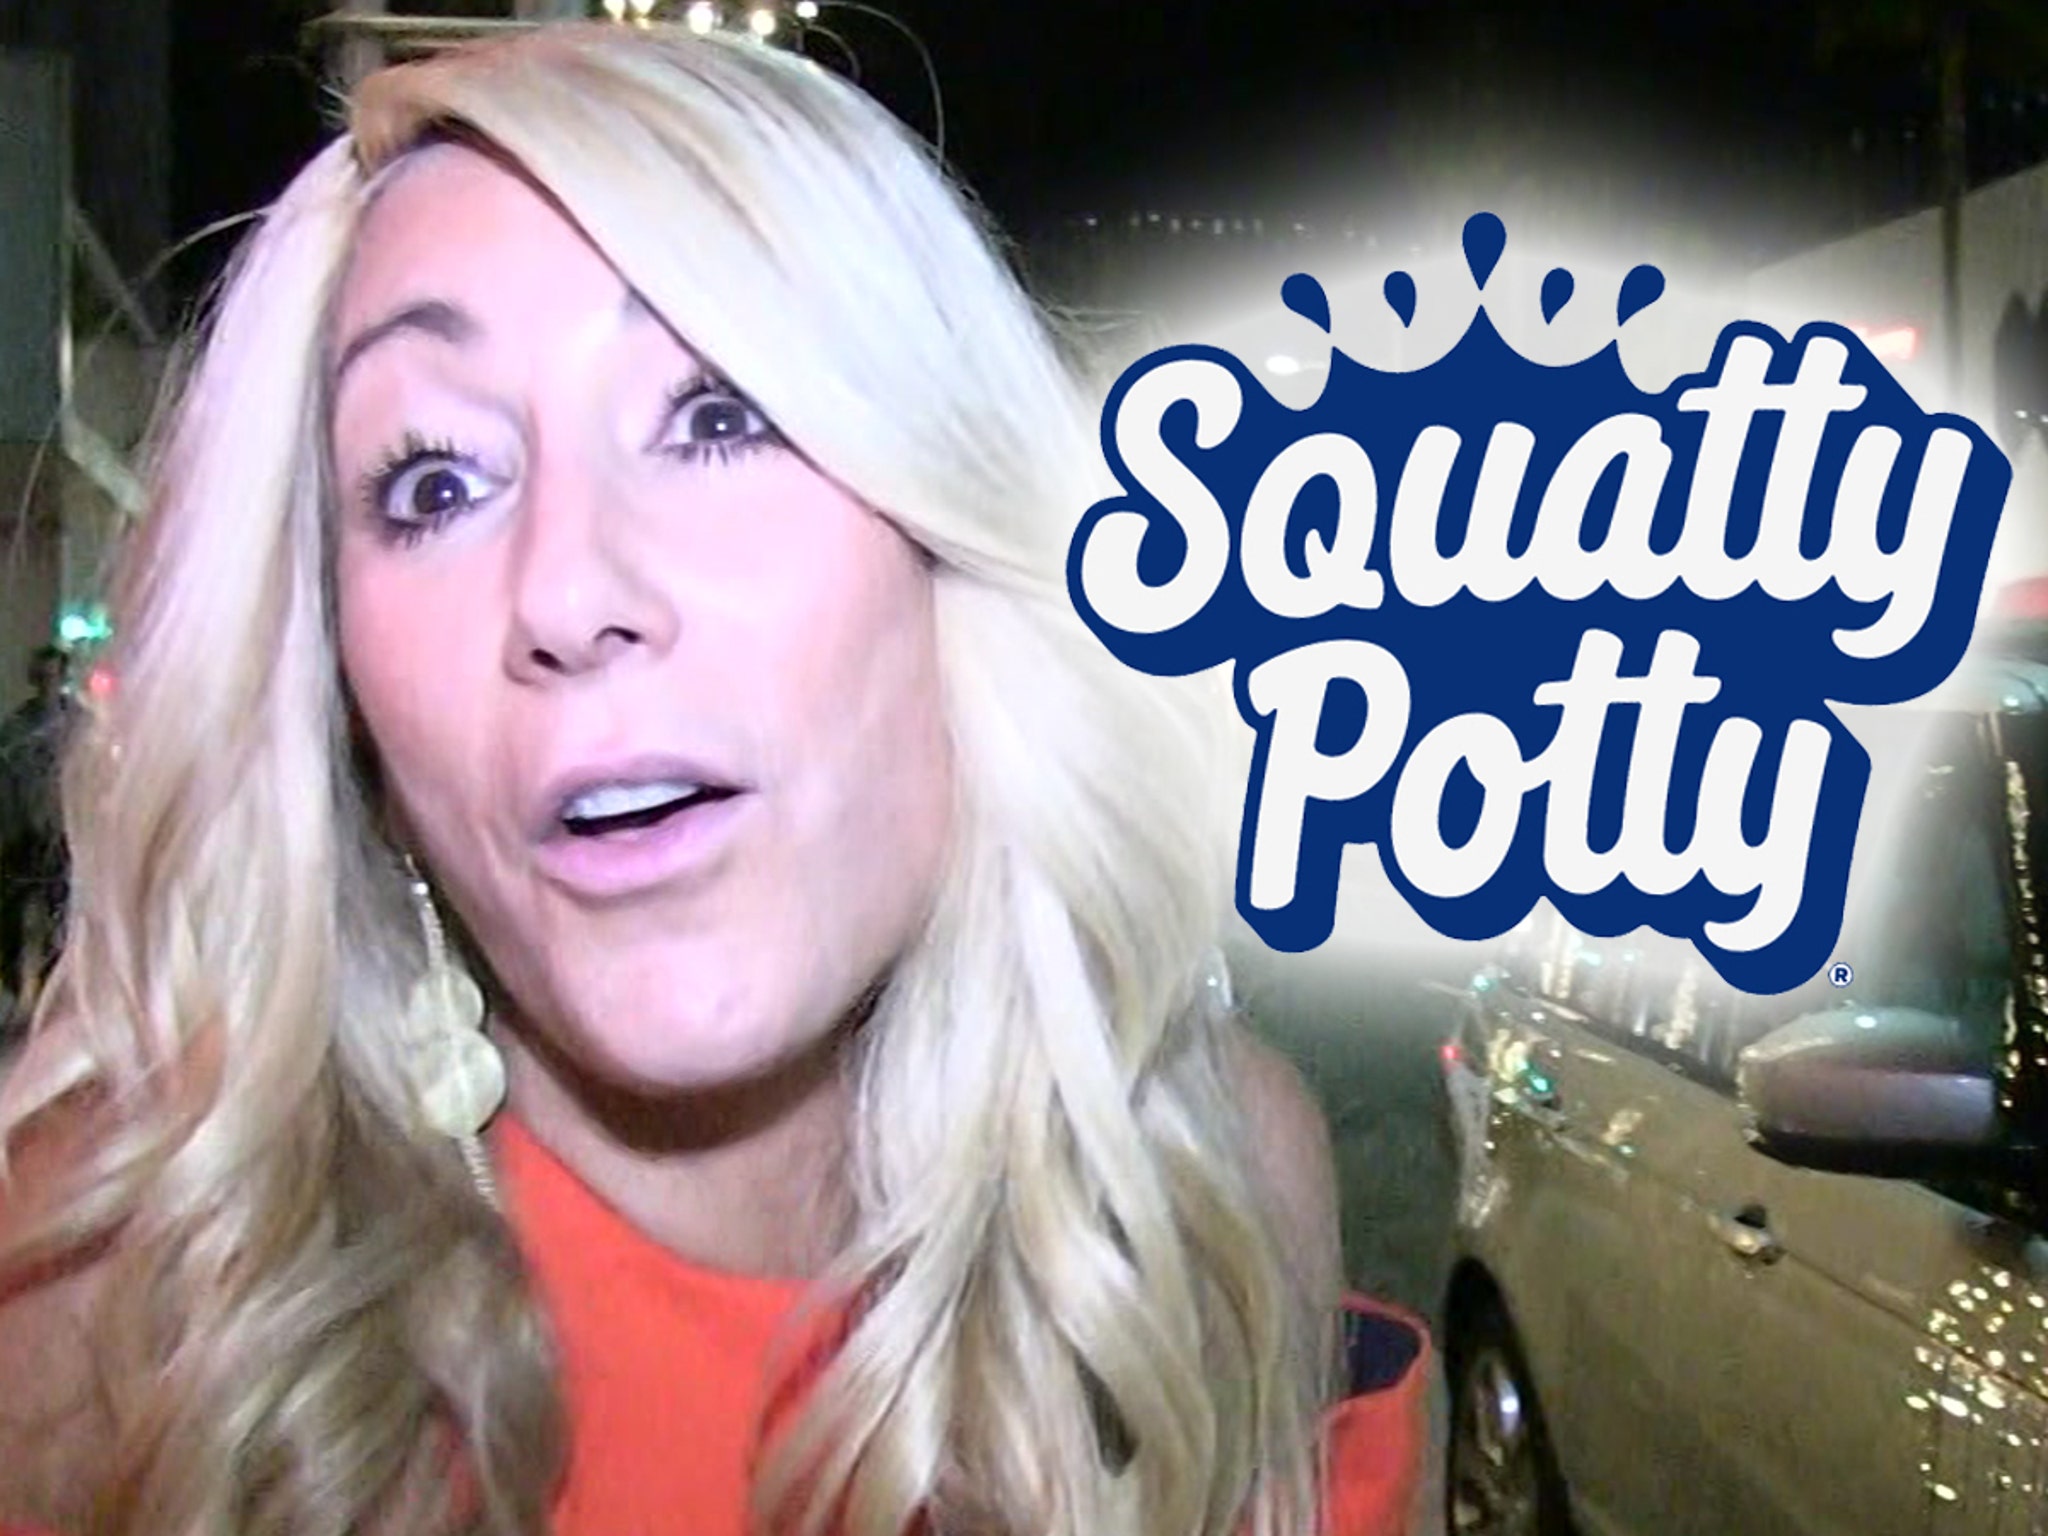 Mom's constipation turns into $33 million juggernaut Squatty Potty